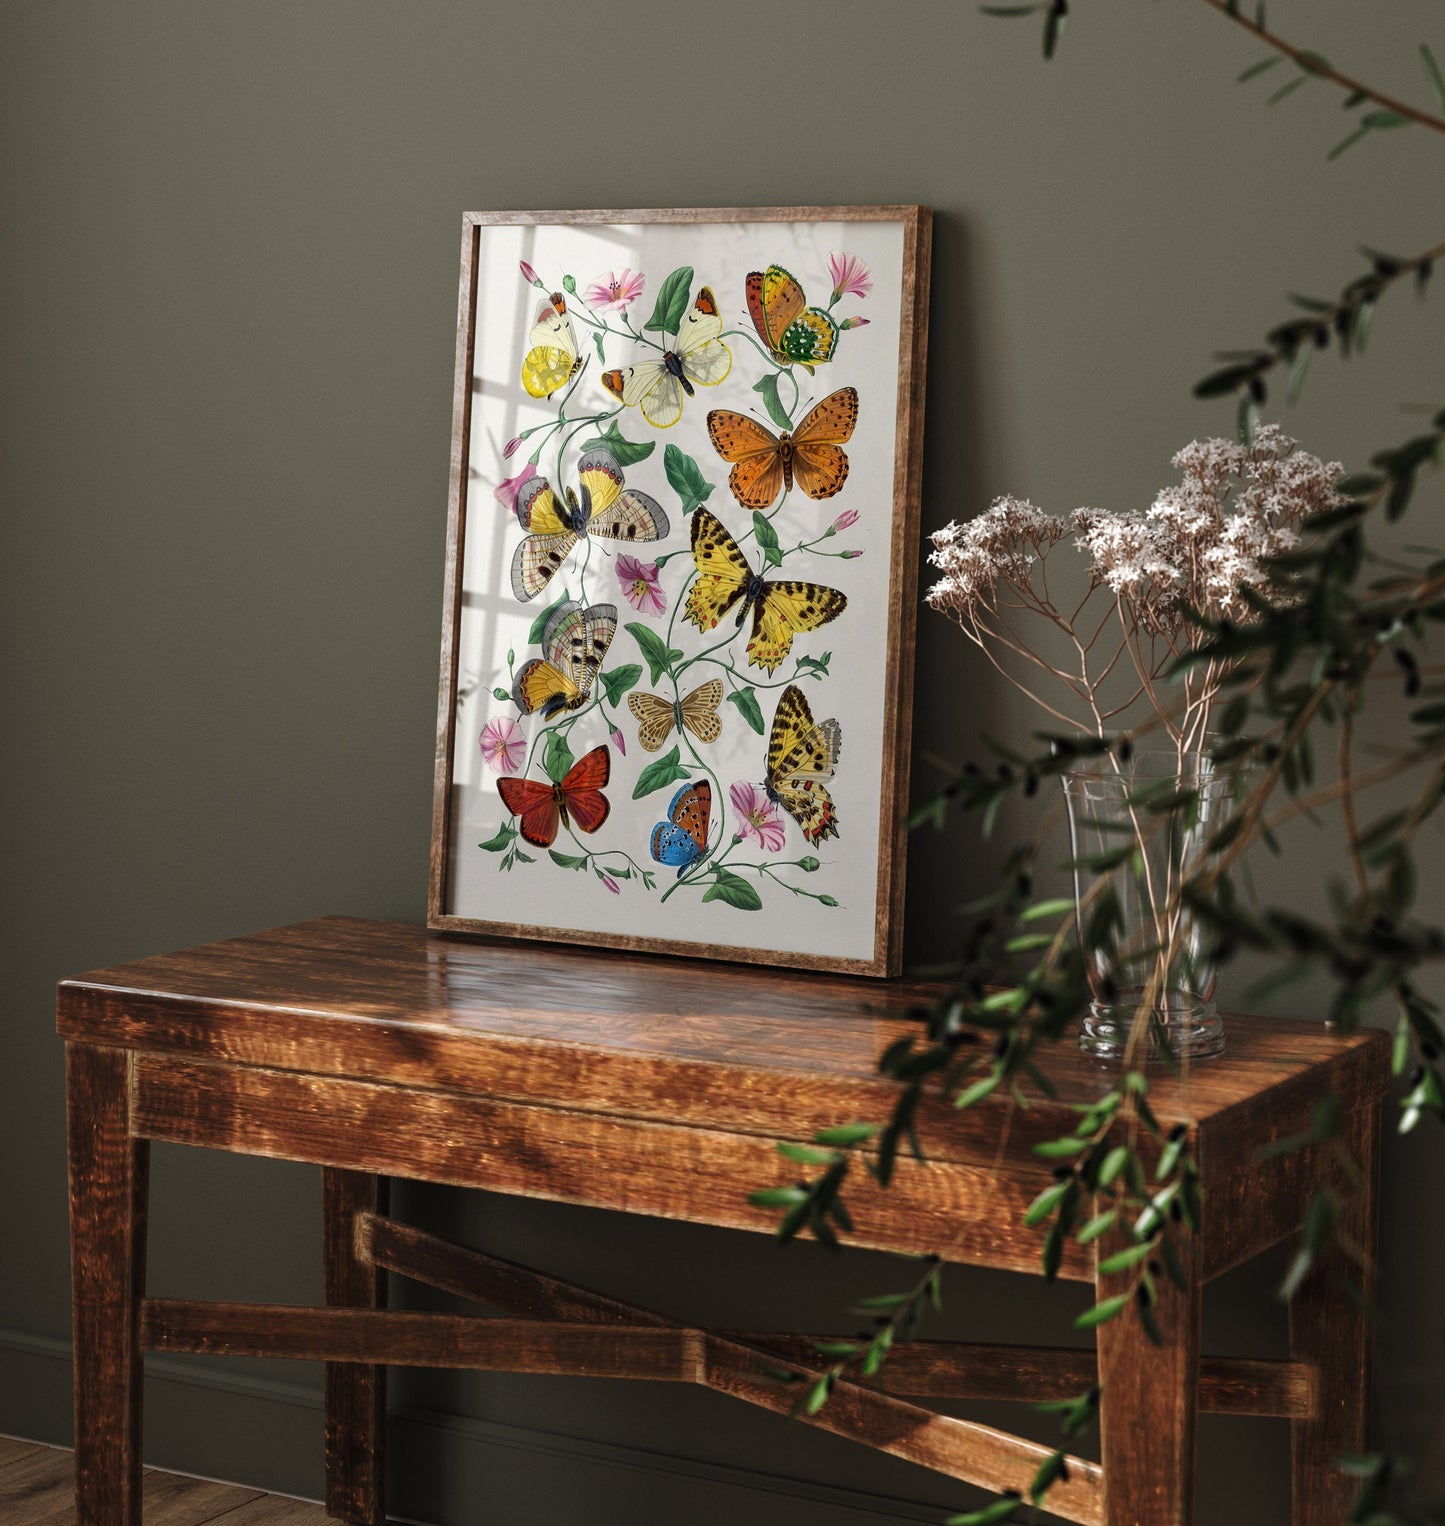 Butterflies Wall Art Print, Vintage Butterfly Print, Unframed, Butterflies, A4, A3, A2, A1, Butterfly Poster, Butterfly Gift, Vintage